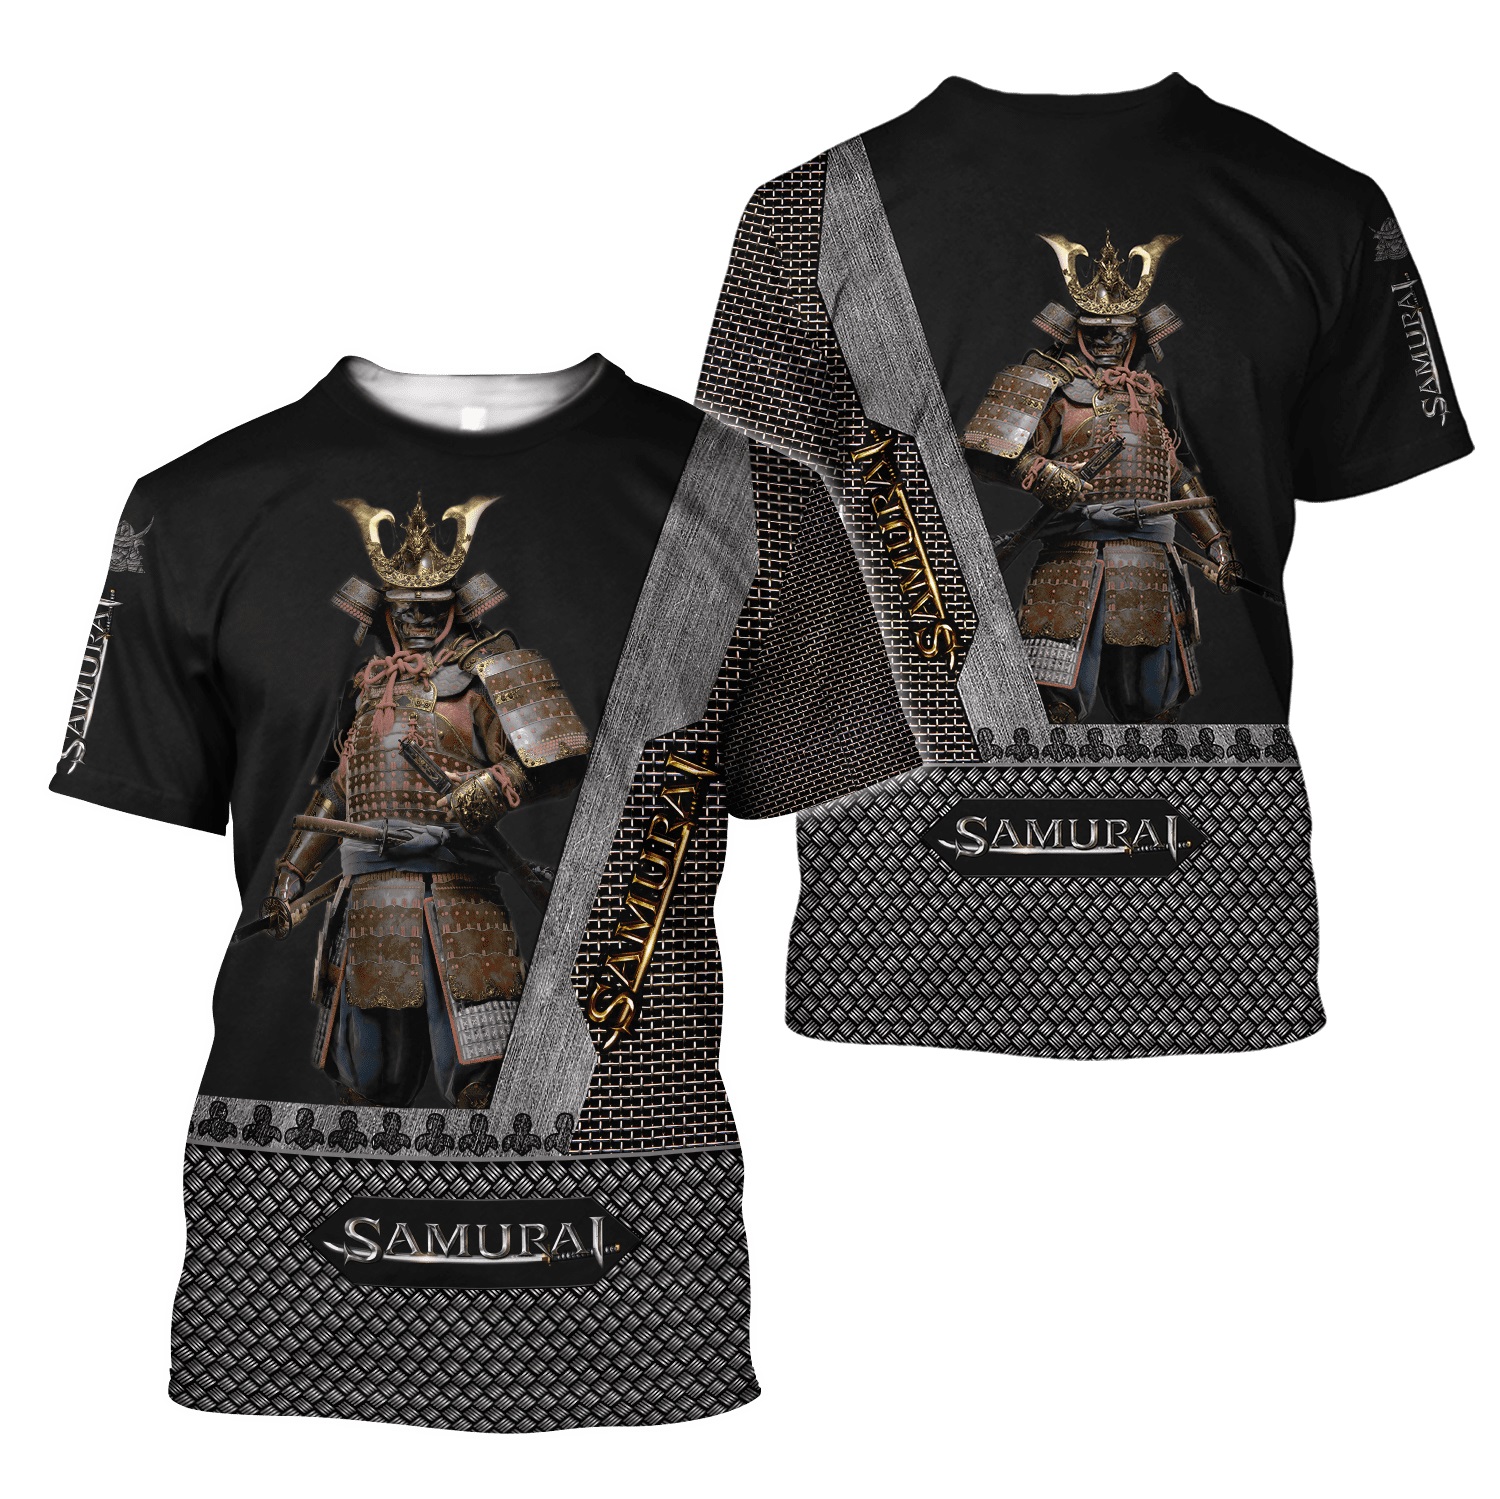 Samurai all over printed t shirt